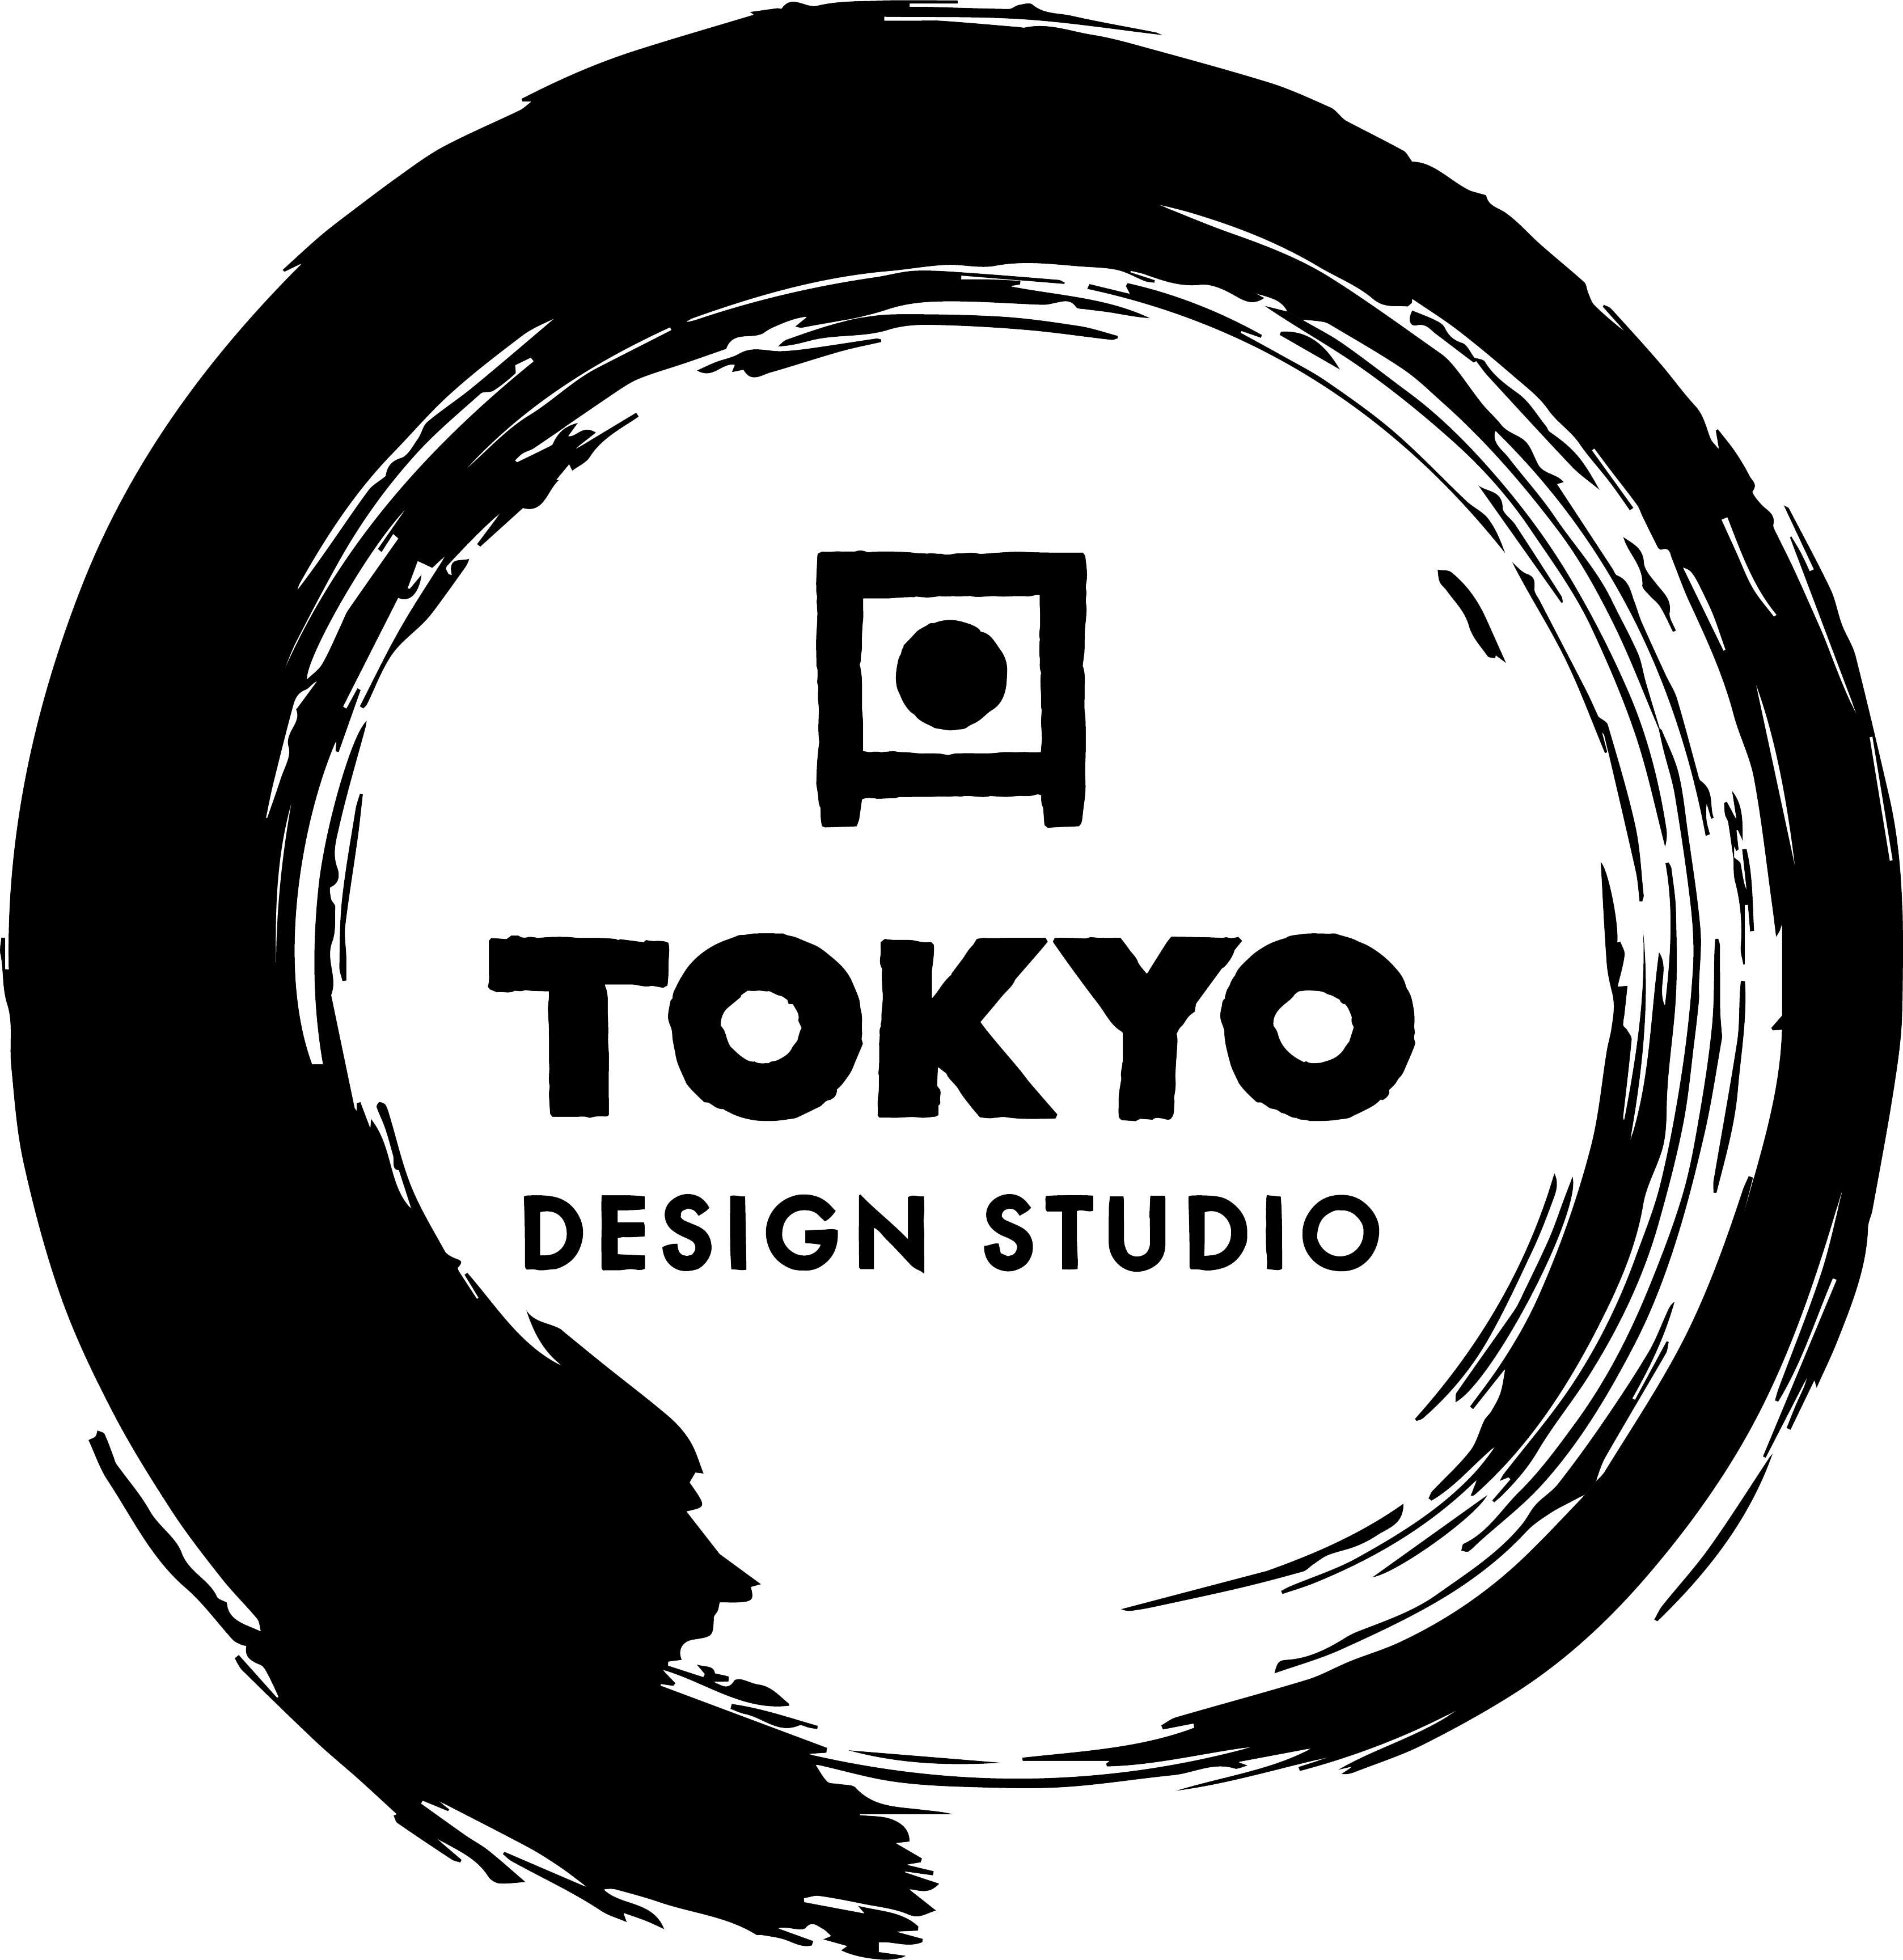 https://images.prismic.io/royaldesign/bc7bce46-071e-43a8-8678-8907ccb29bdf_Tokyo_Design_Studio_Logo_Circle_Backstamp.png?auto=compress,format